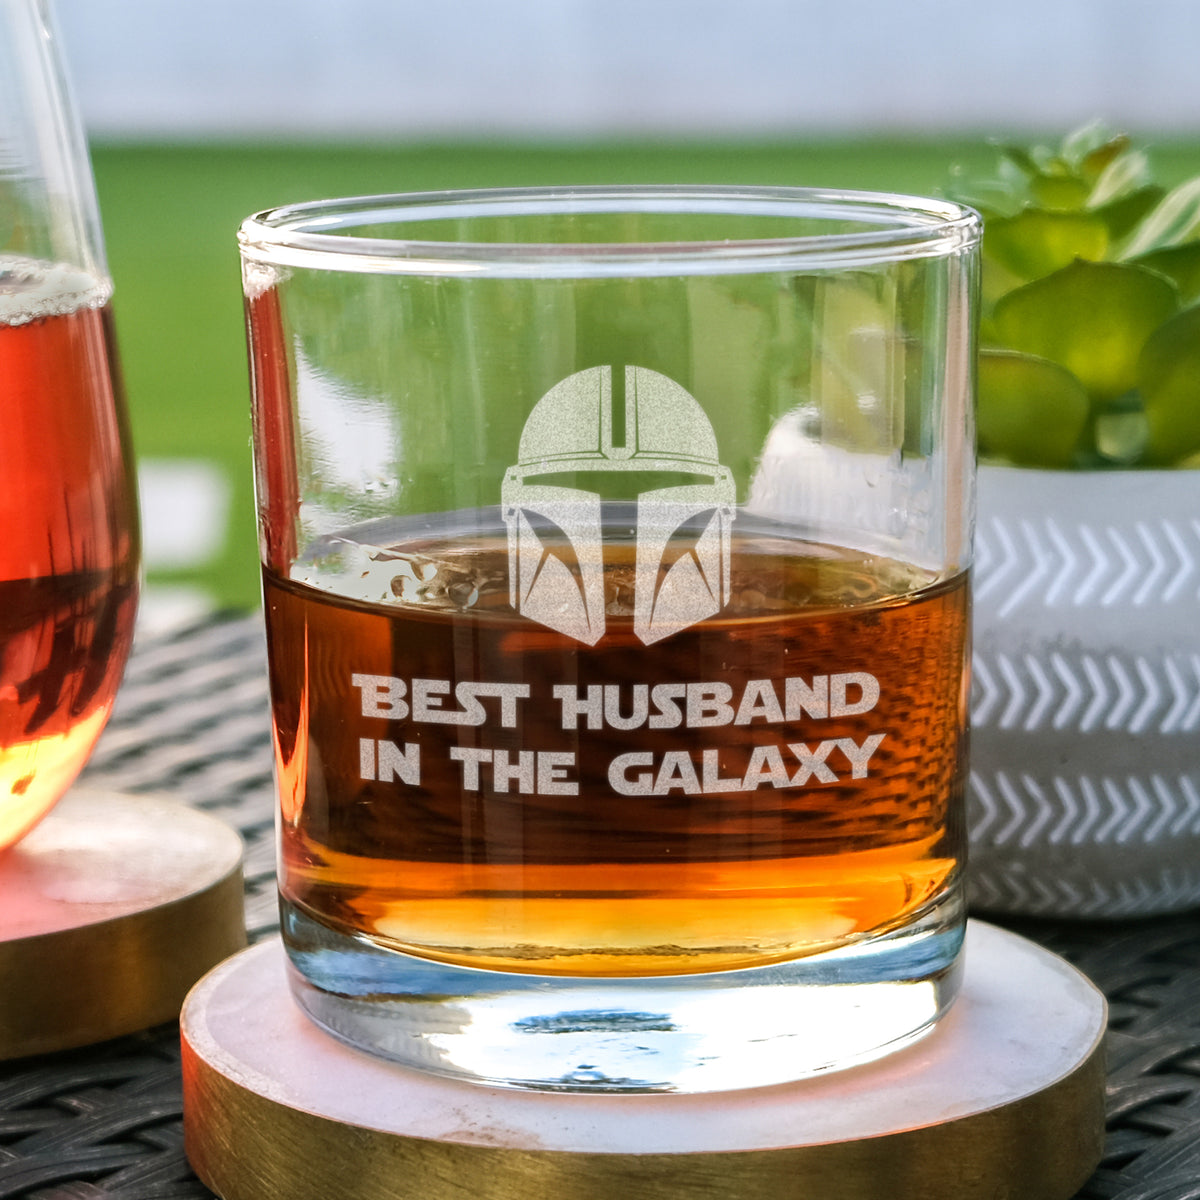 Star Wars The Mandalorian Whiskey Glass Set